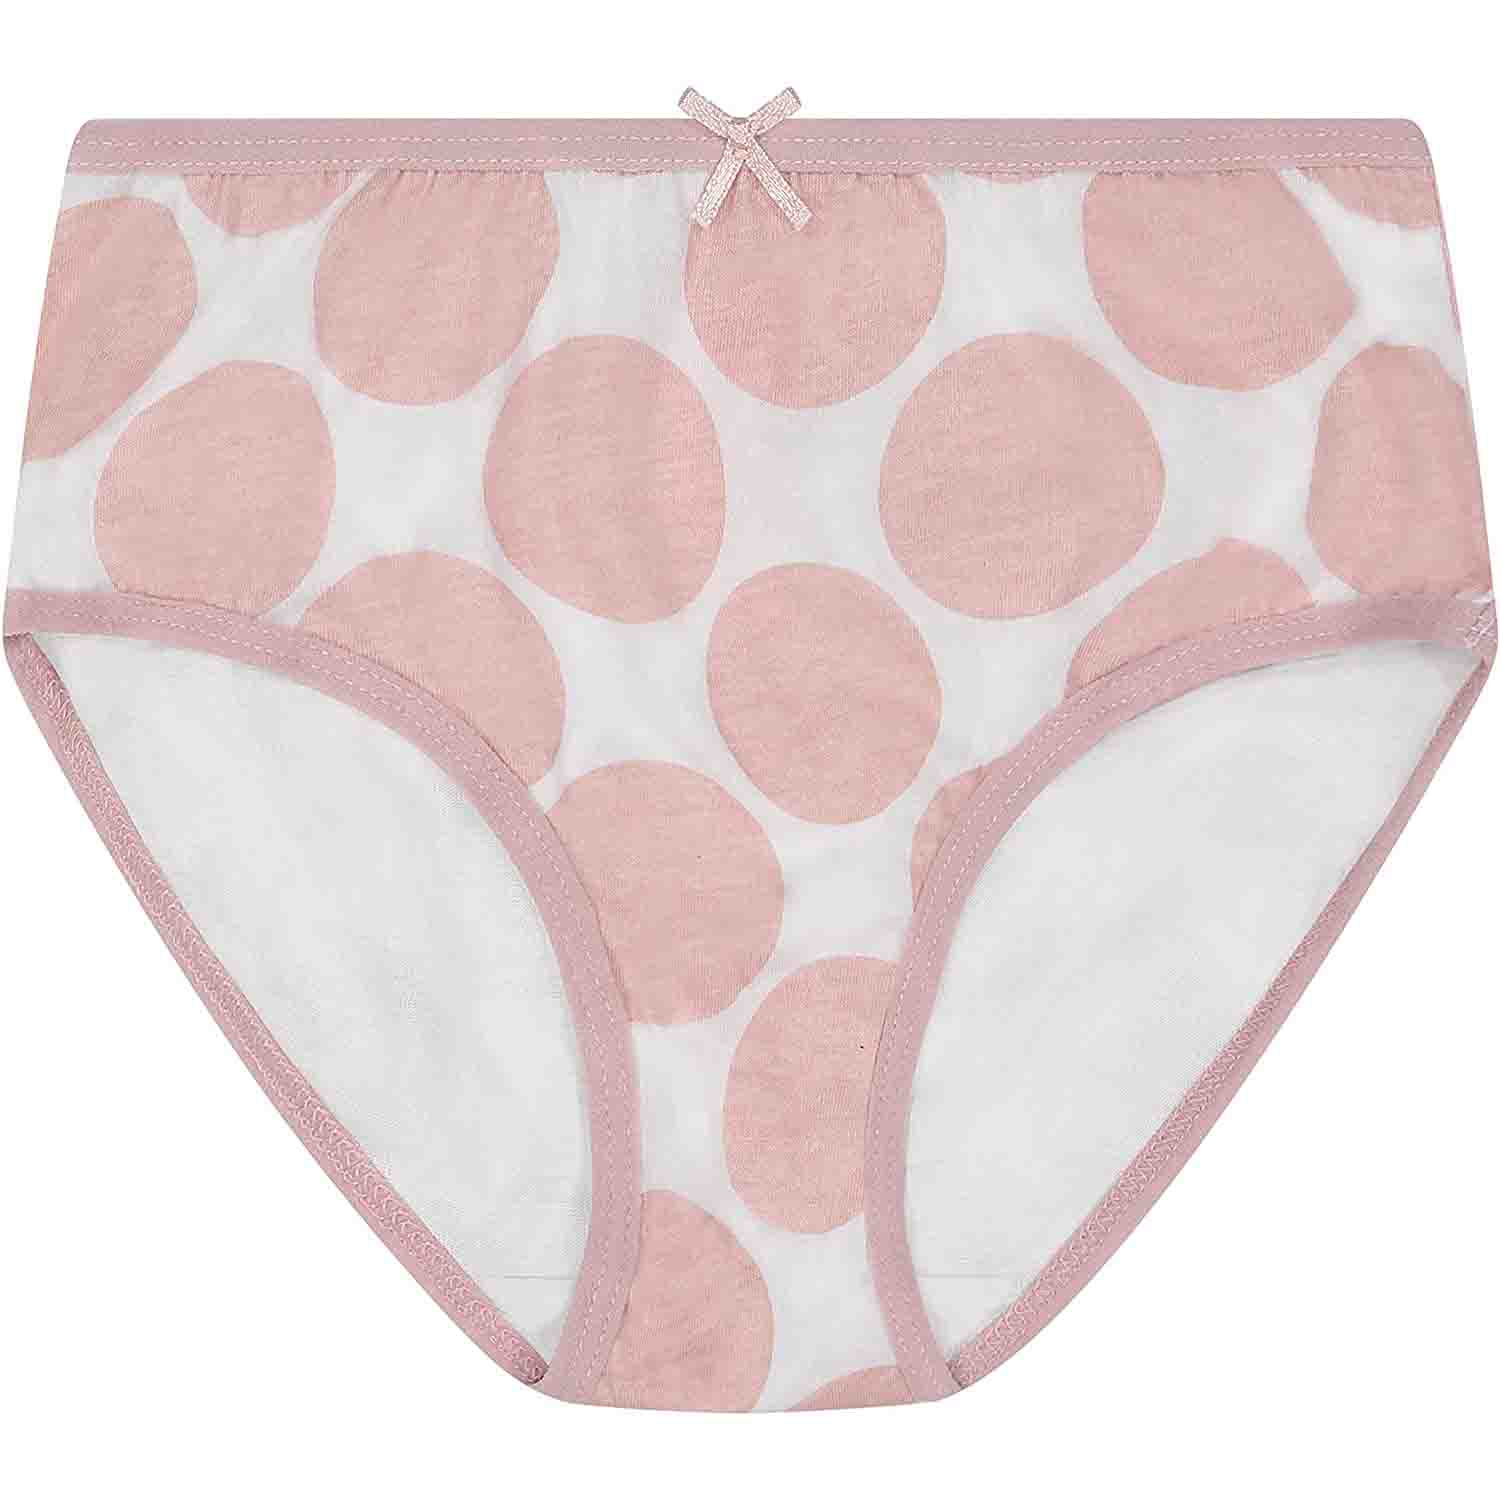 Buy NAUMA Polka DOT Panties for Women/Girls (Pack of 3&6) (Small